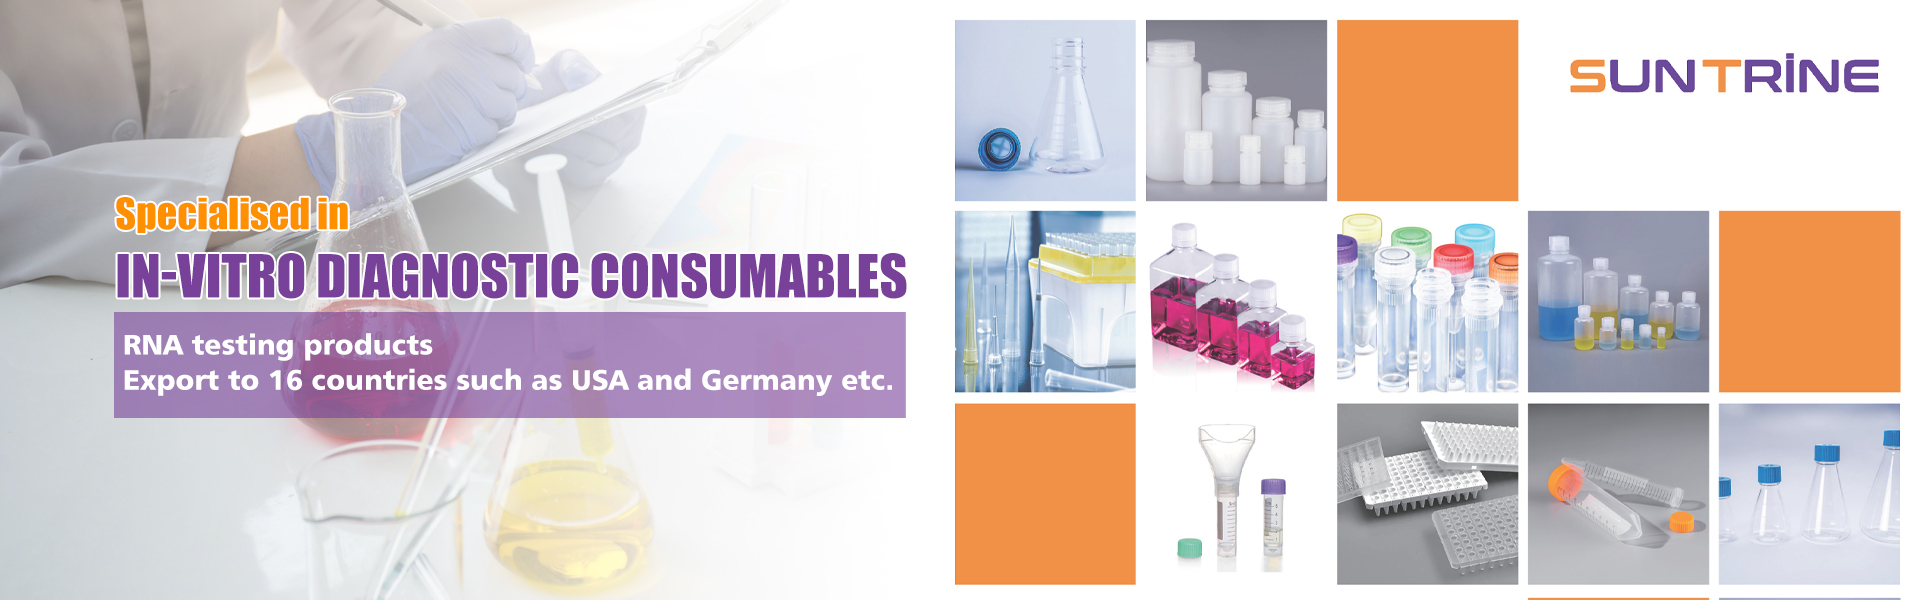 Specialised in in-vitro diagnostic consumables